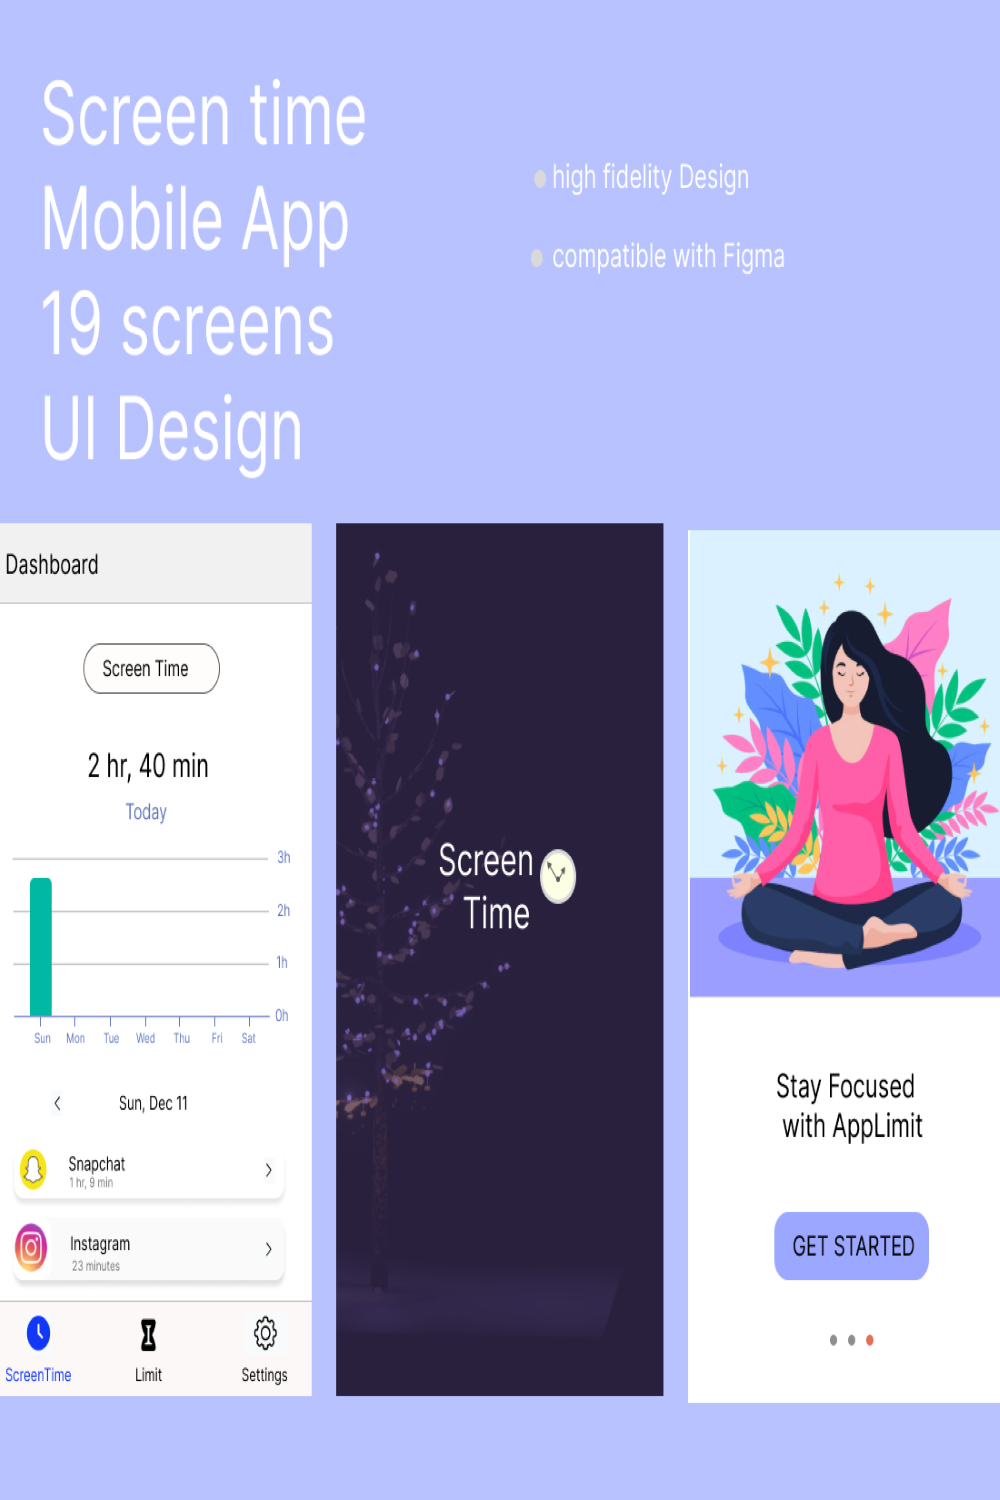 Screentime Mobile App UI Design pinterest image.